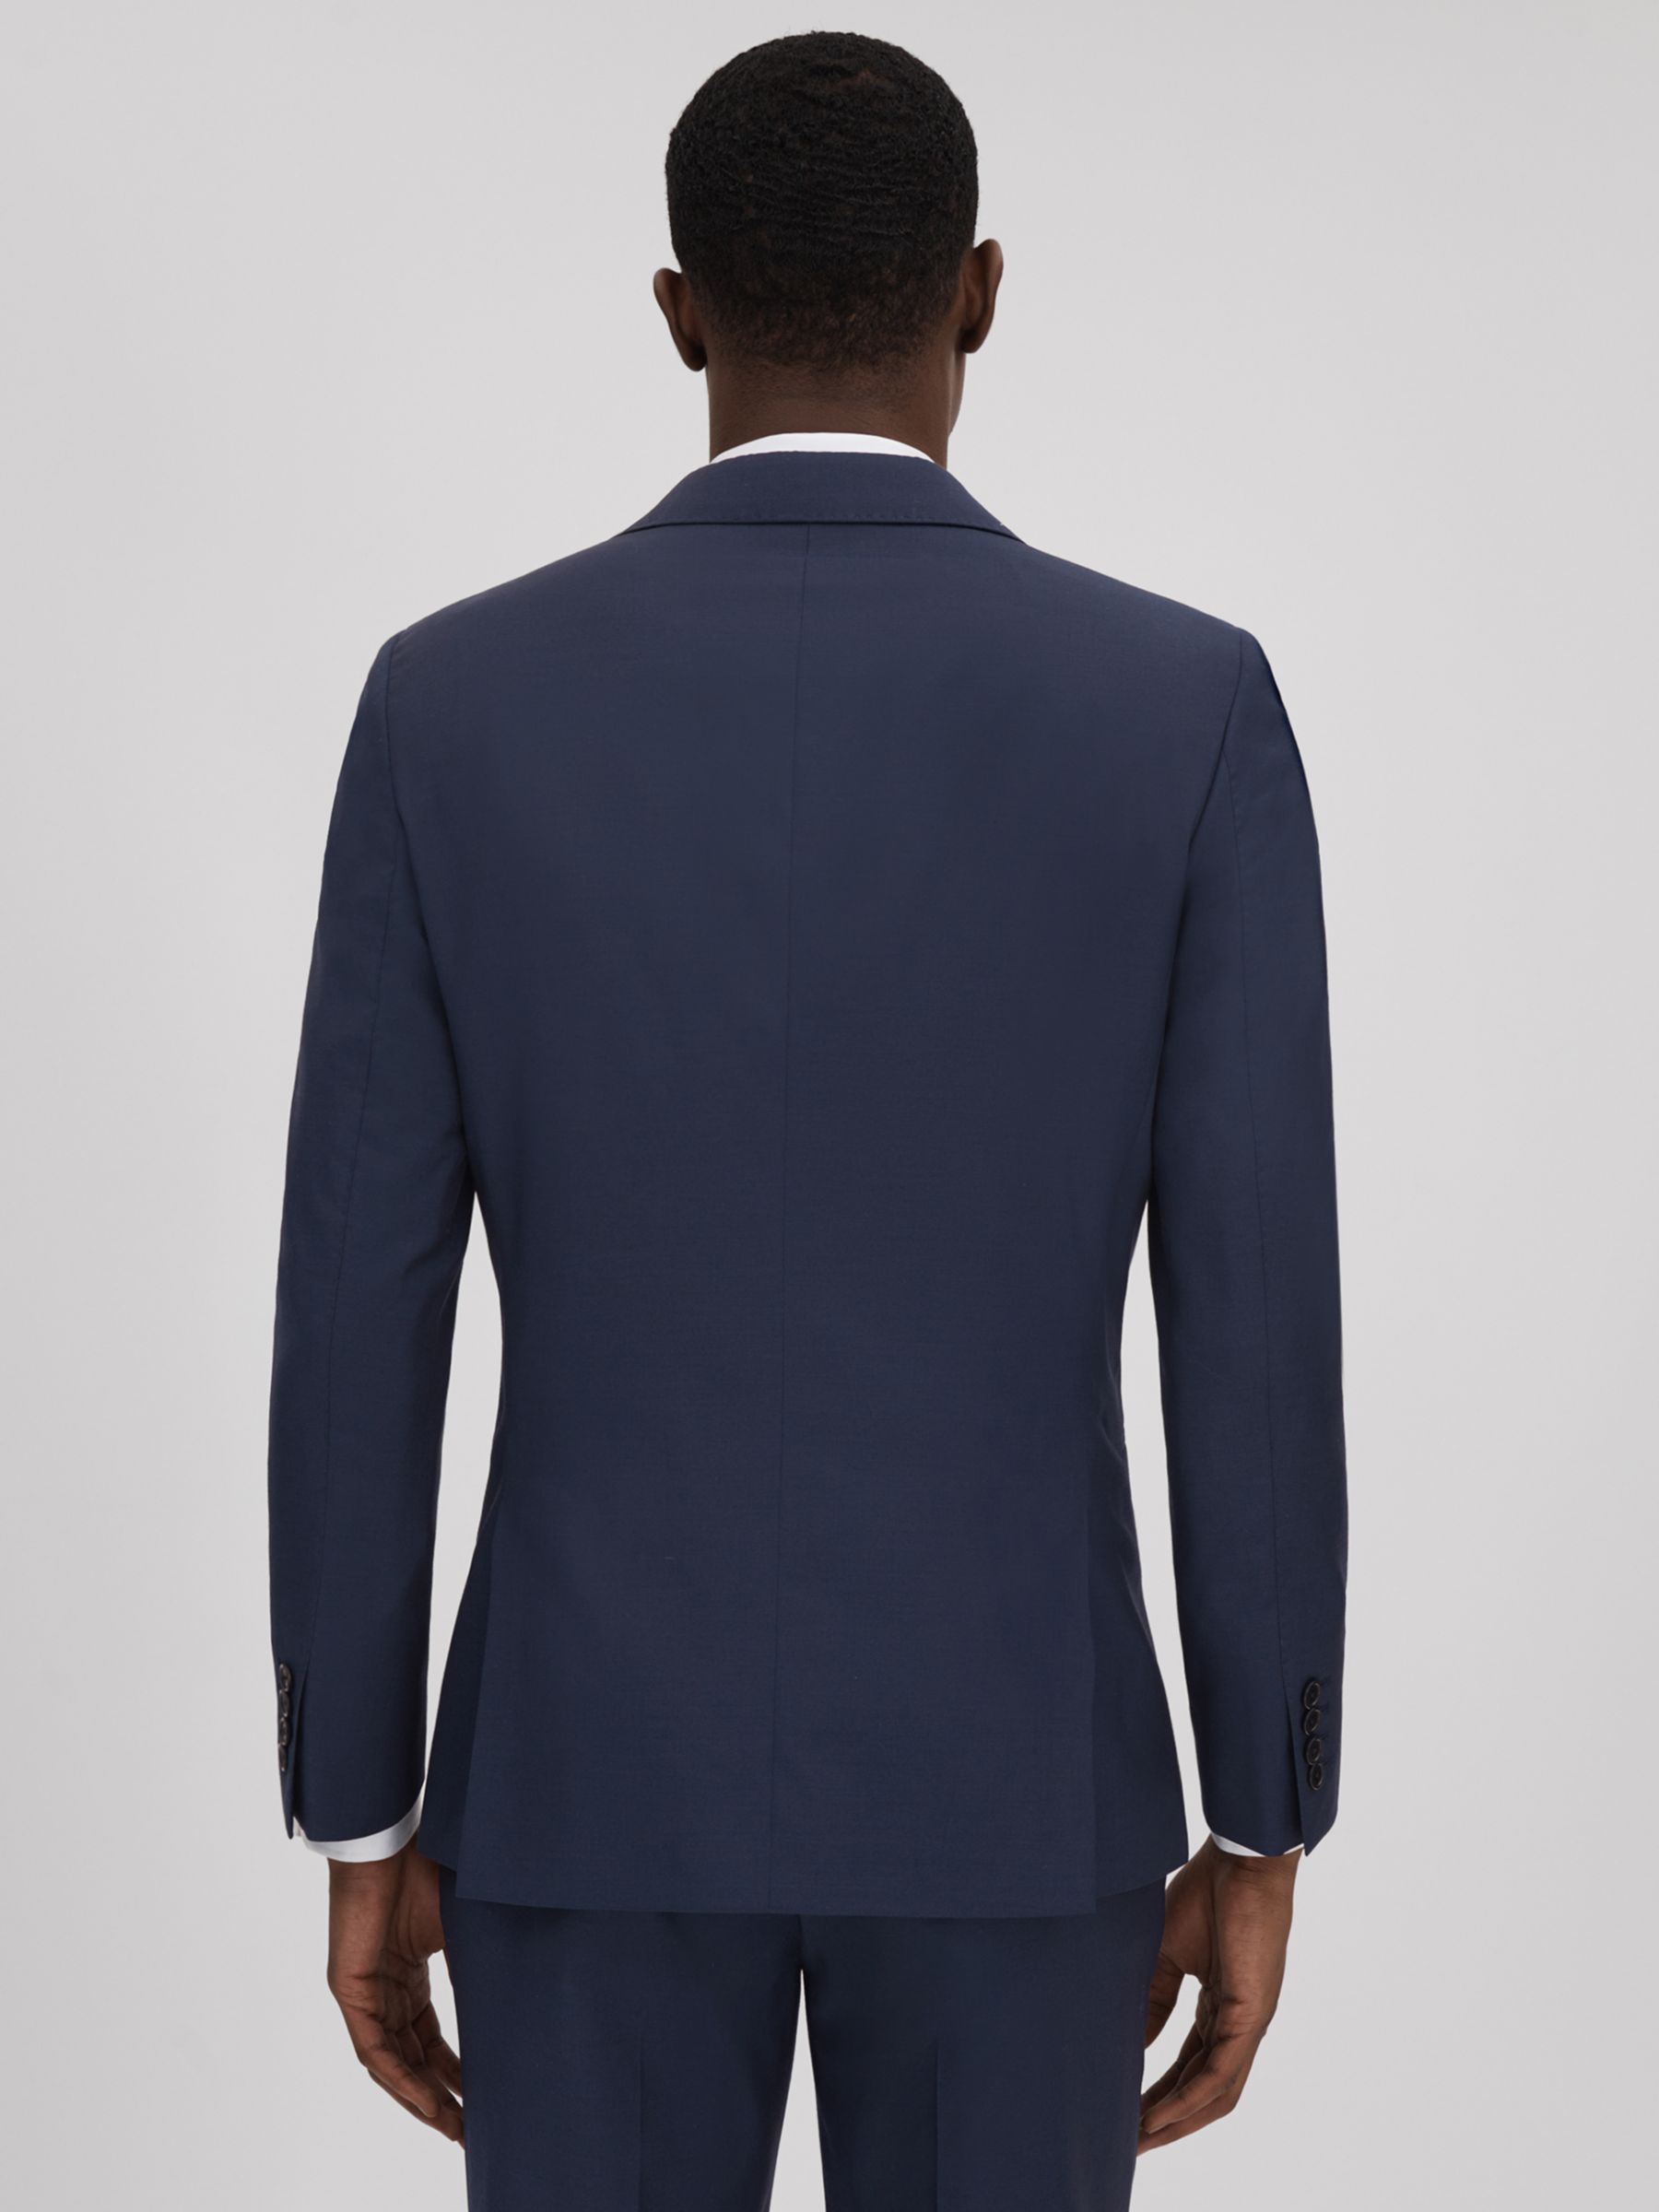 Buy Reiss Destiny Wool Suit Jacket, Navy Online at johnlewis.com